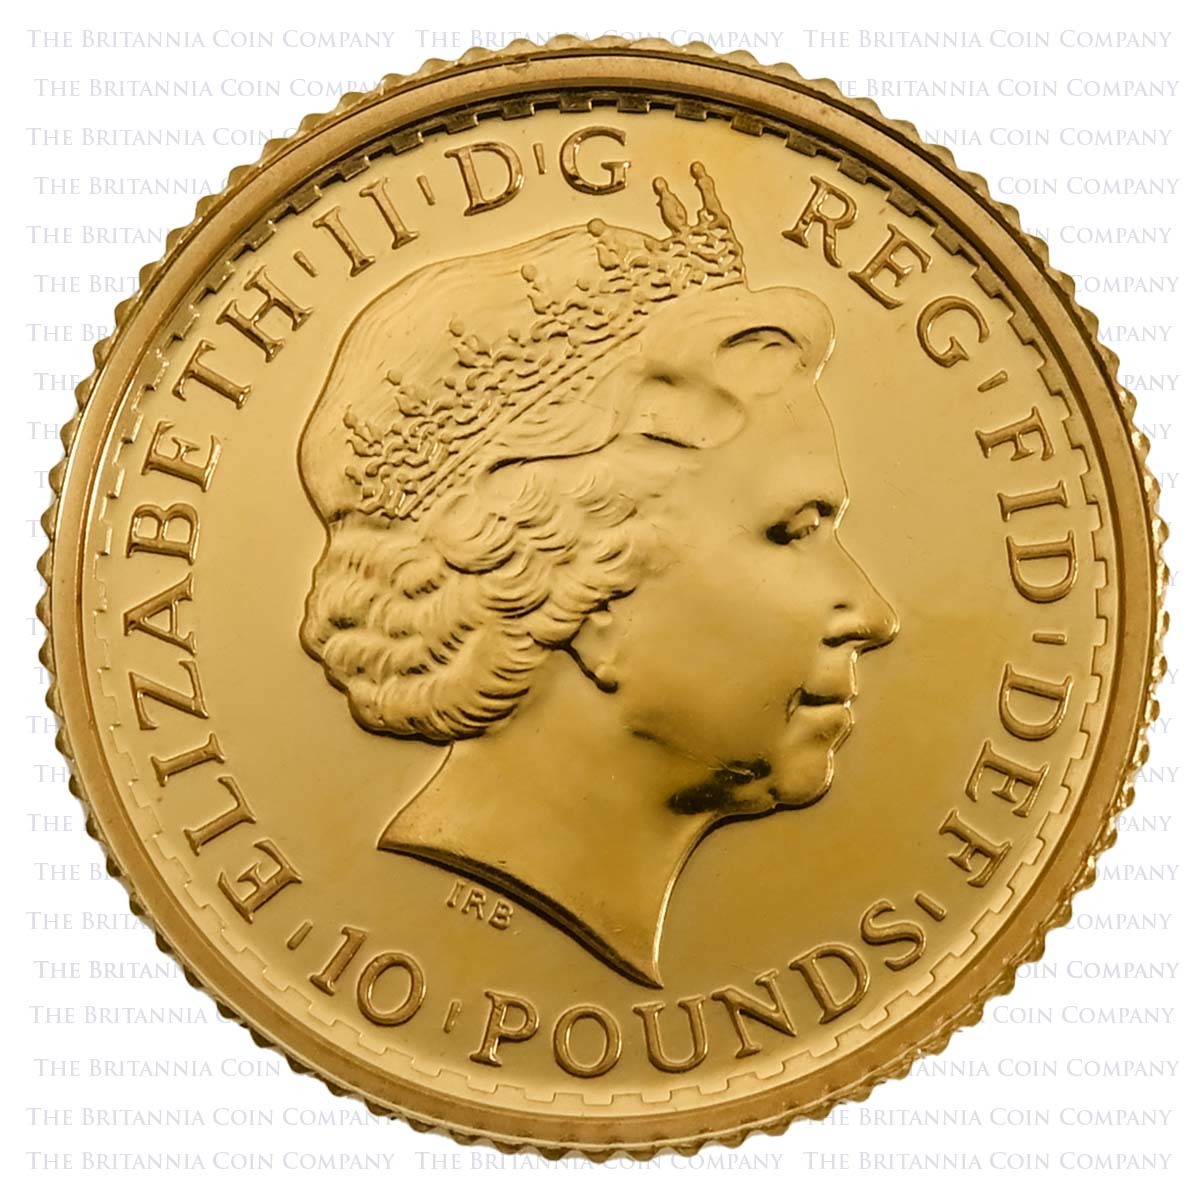 1/10 Ounce Gold Britannia Post 2013 24 Carat (Best Value) Obverse